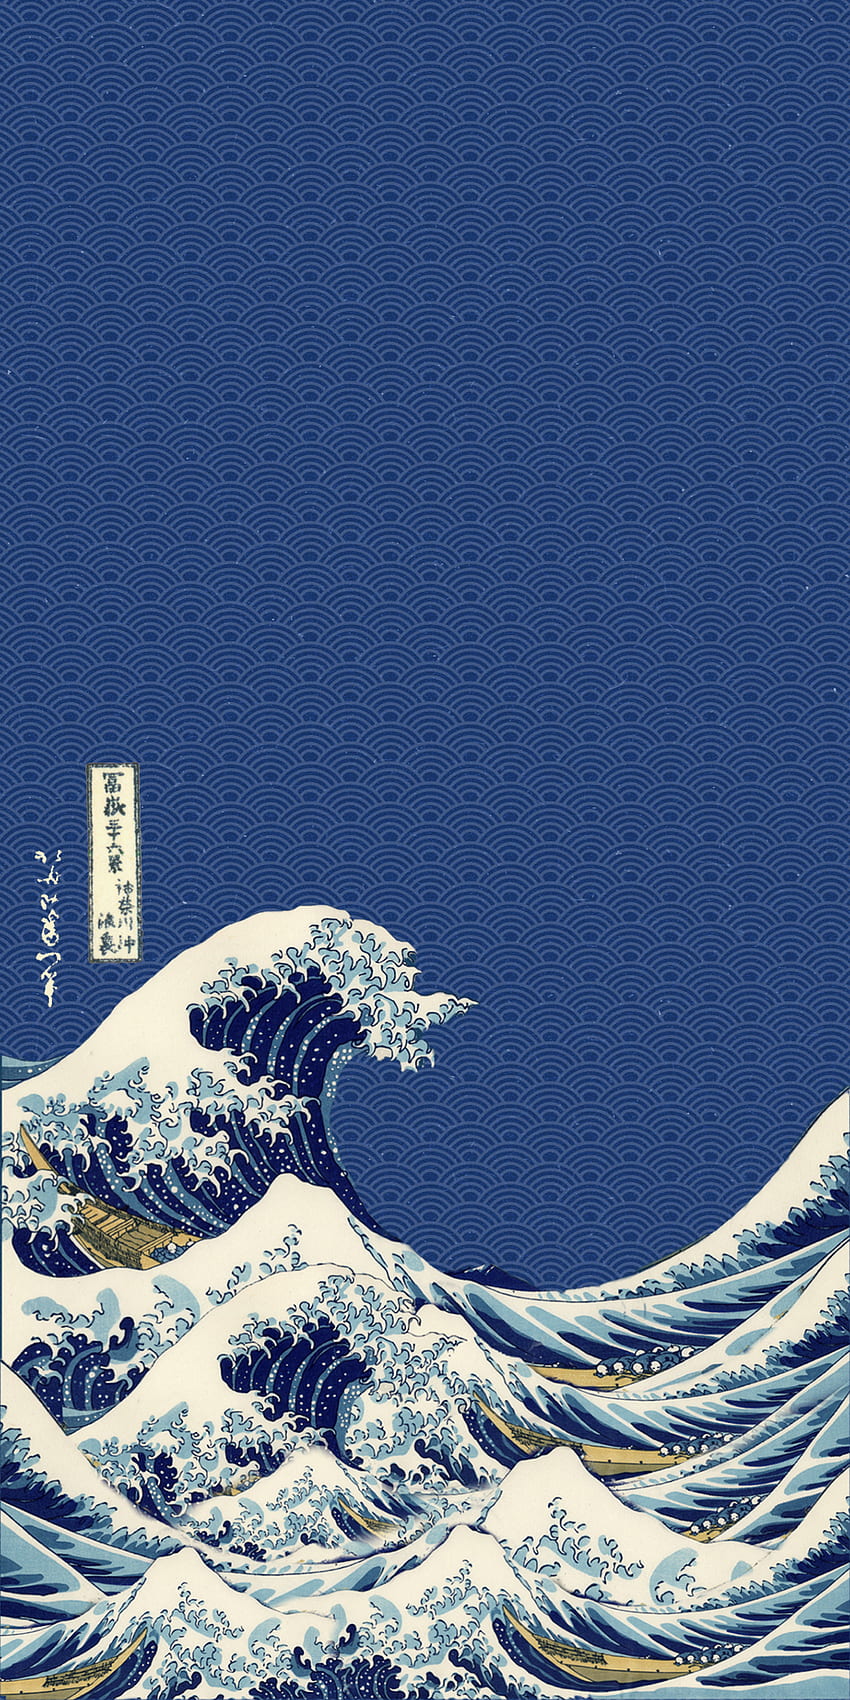 My Edit Of U ThatOneEnemy 's Of Hokusai's The Great Wave : Vertical, Run With the Wind Fond d'écran de téléphone HD